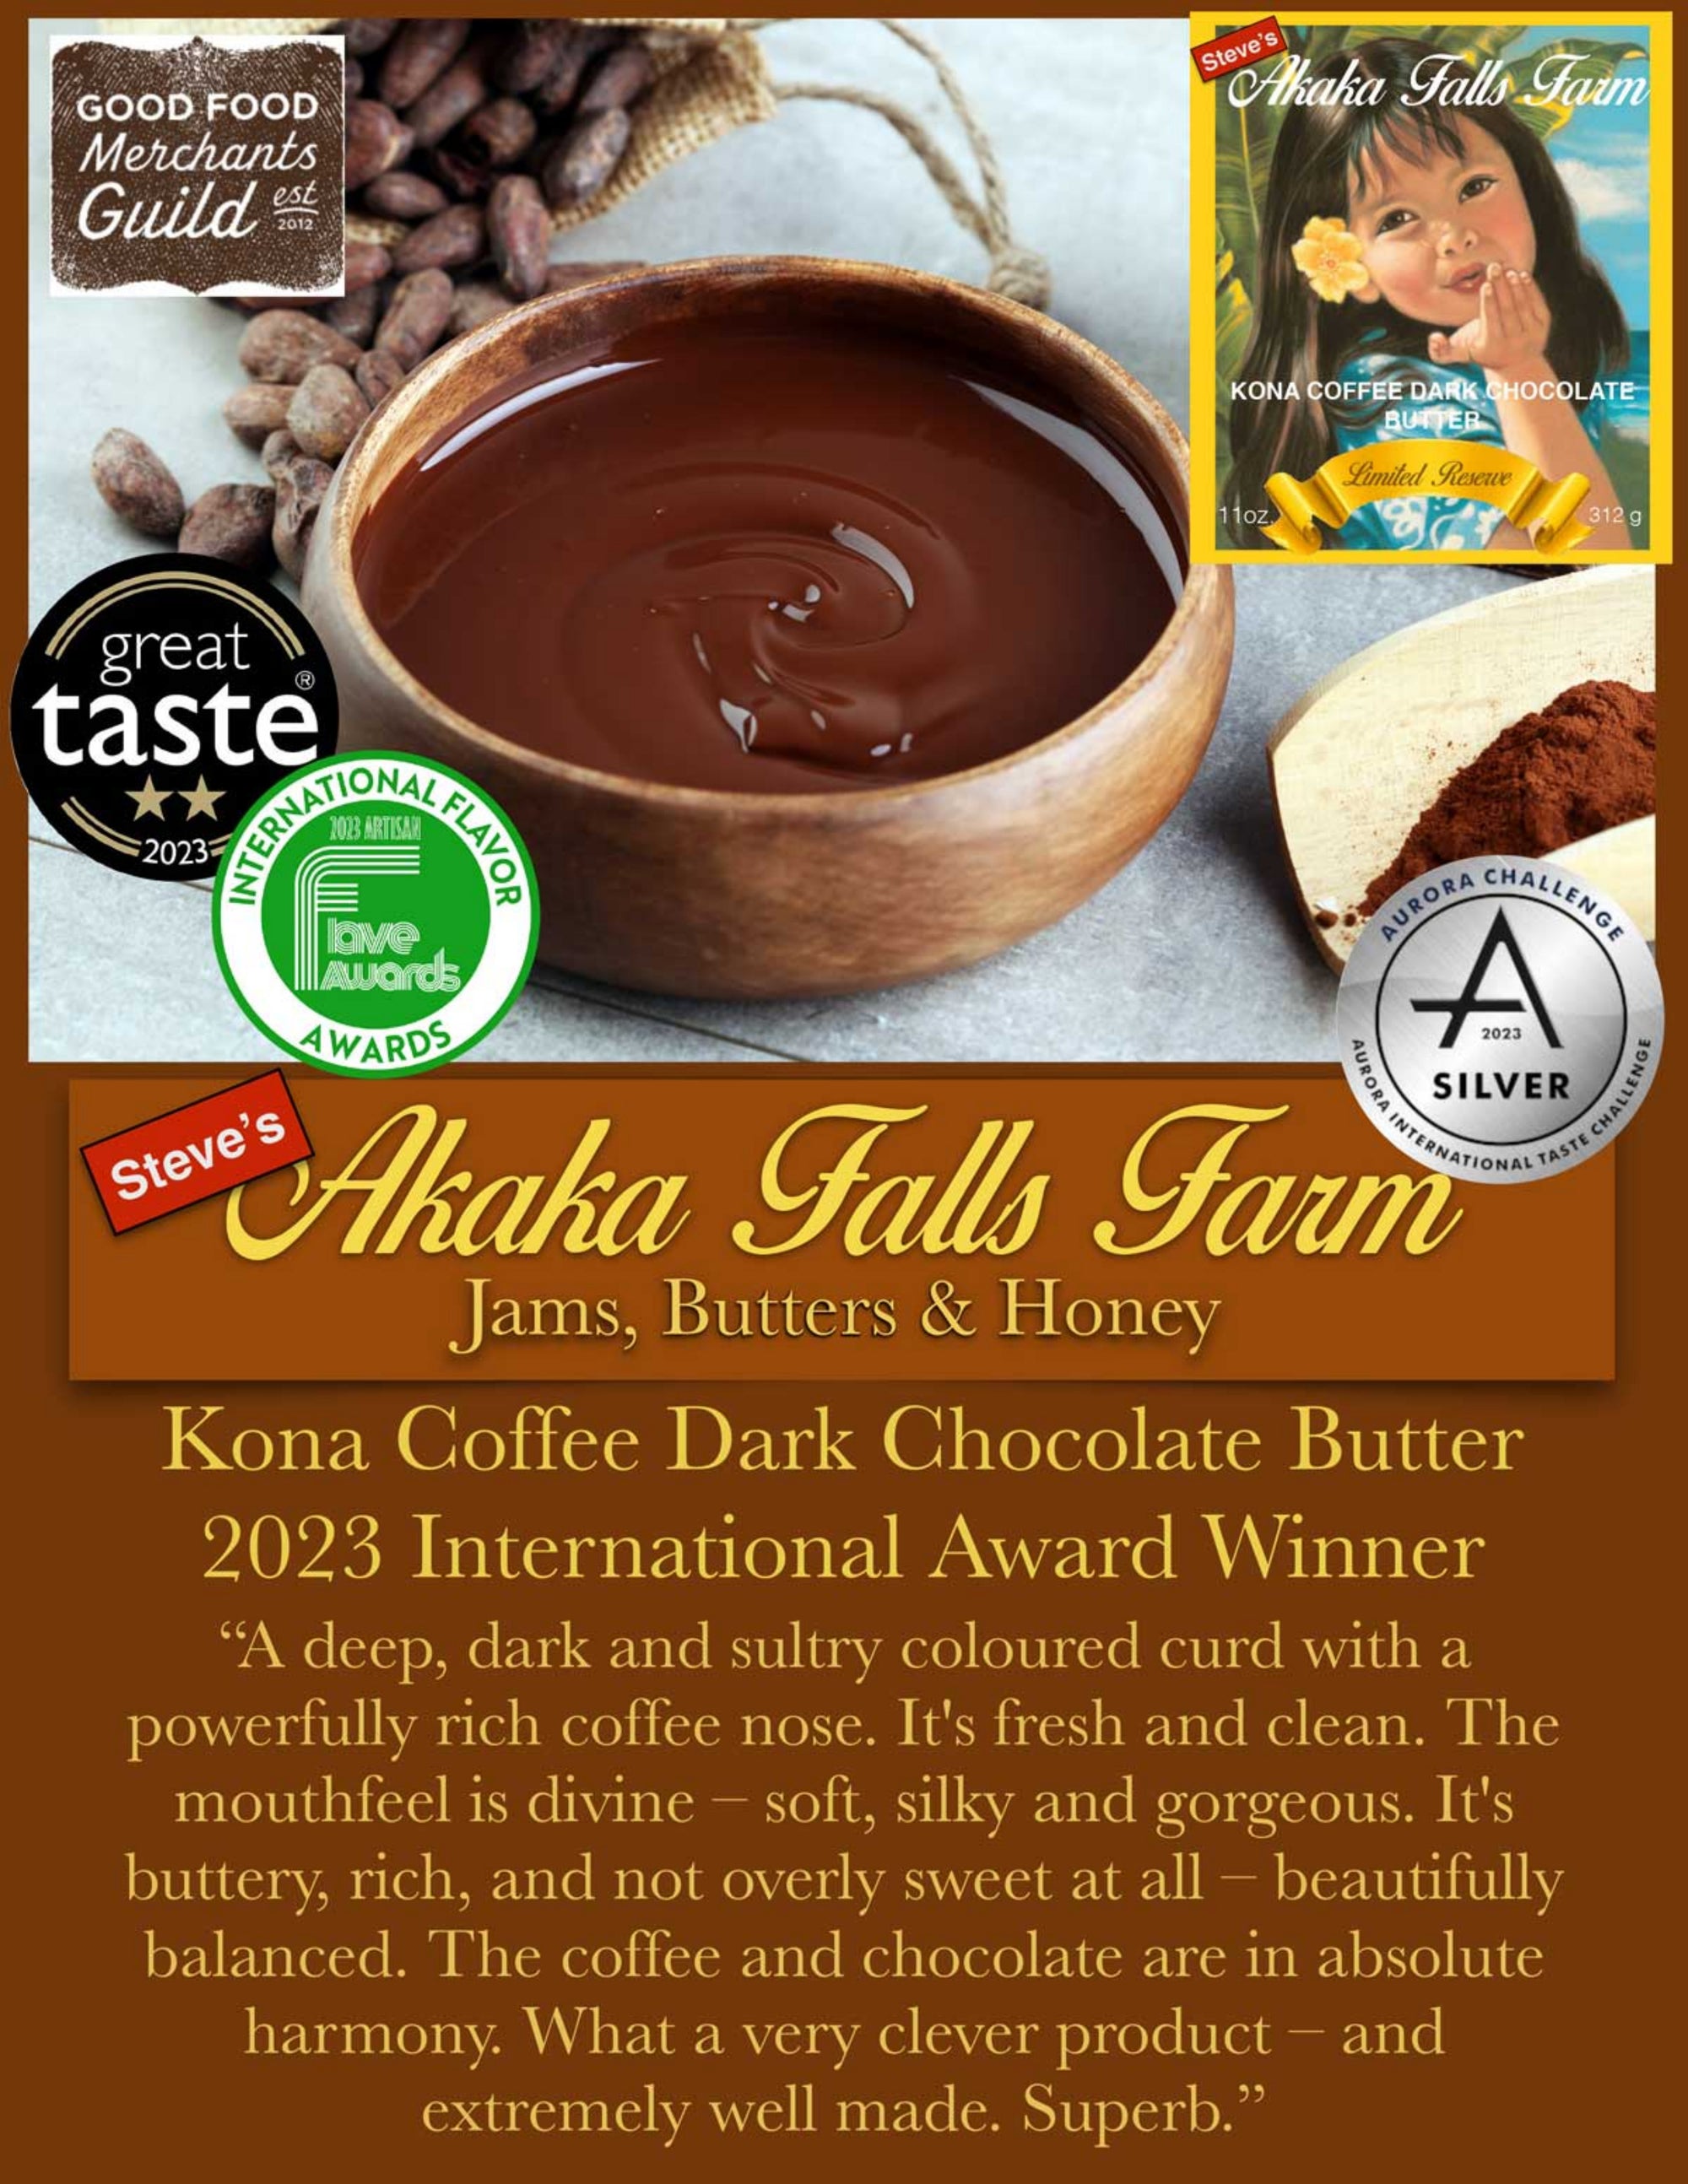 Pop-Up Mākeke - Akaka Falls Farm - Kona Coffee Dark Chocolate Butter - Information